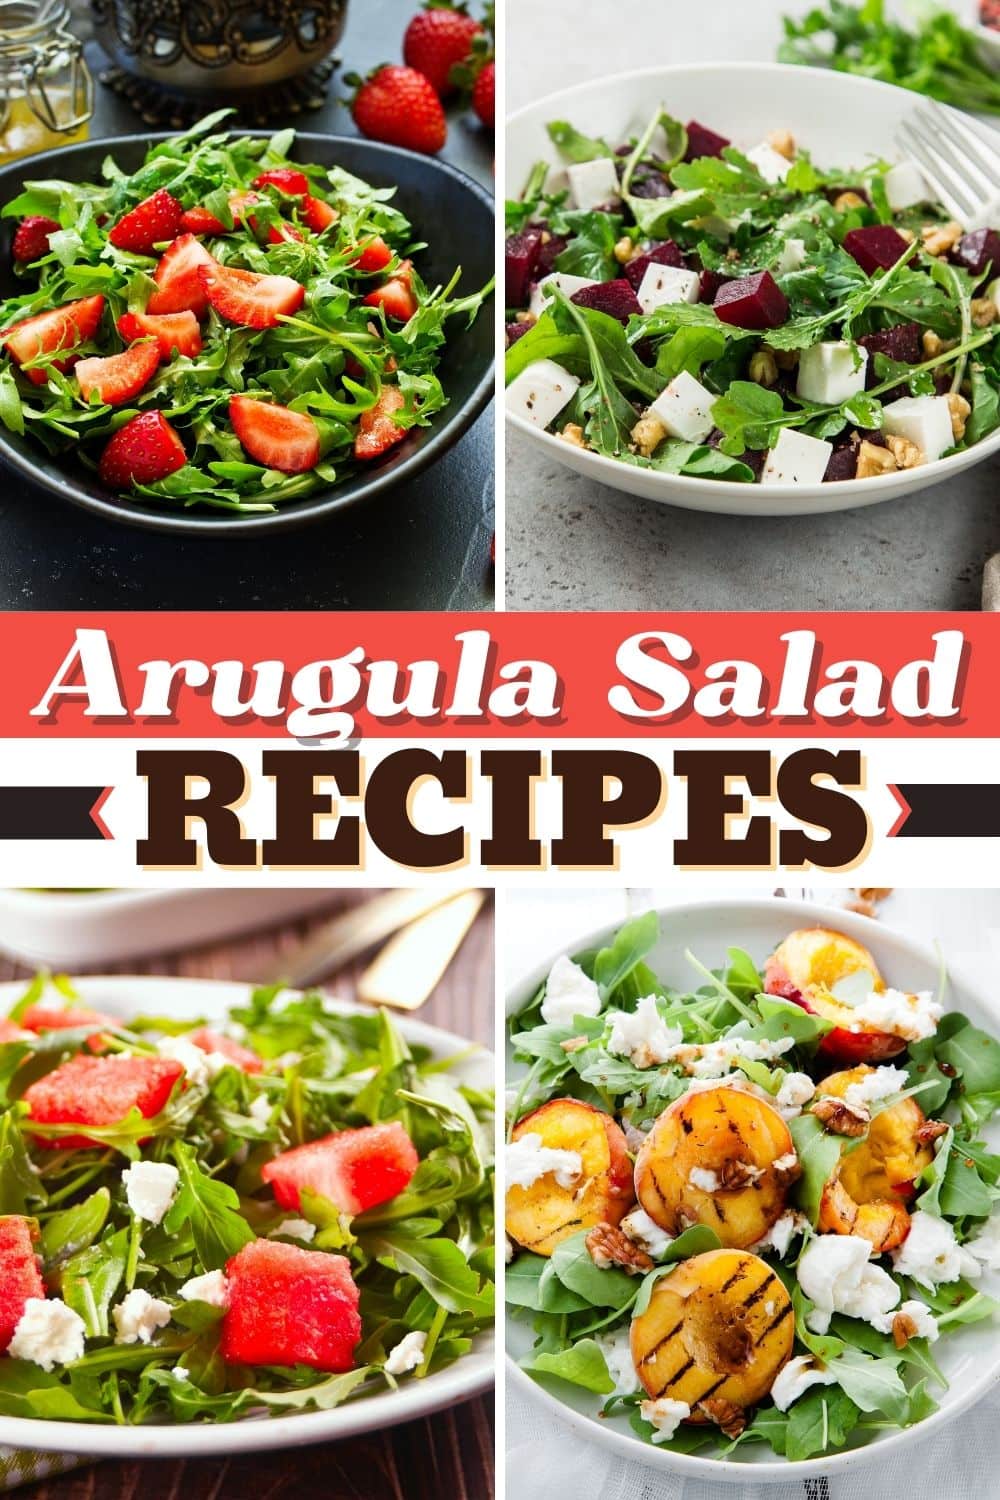 25 Best Arugula Salad Recipes for Fresh Meals - Insanely Good